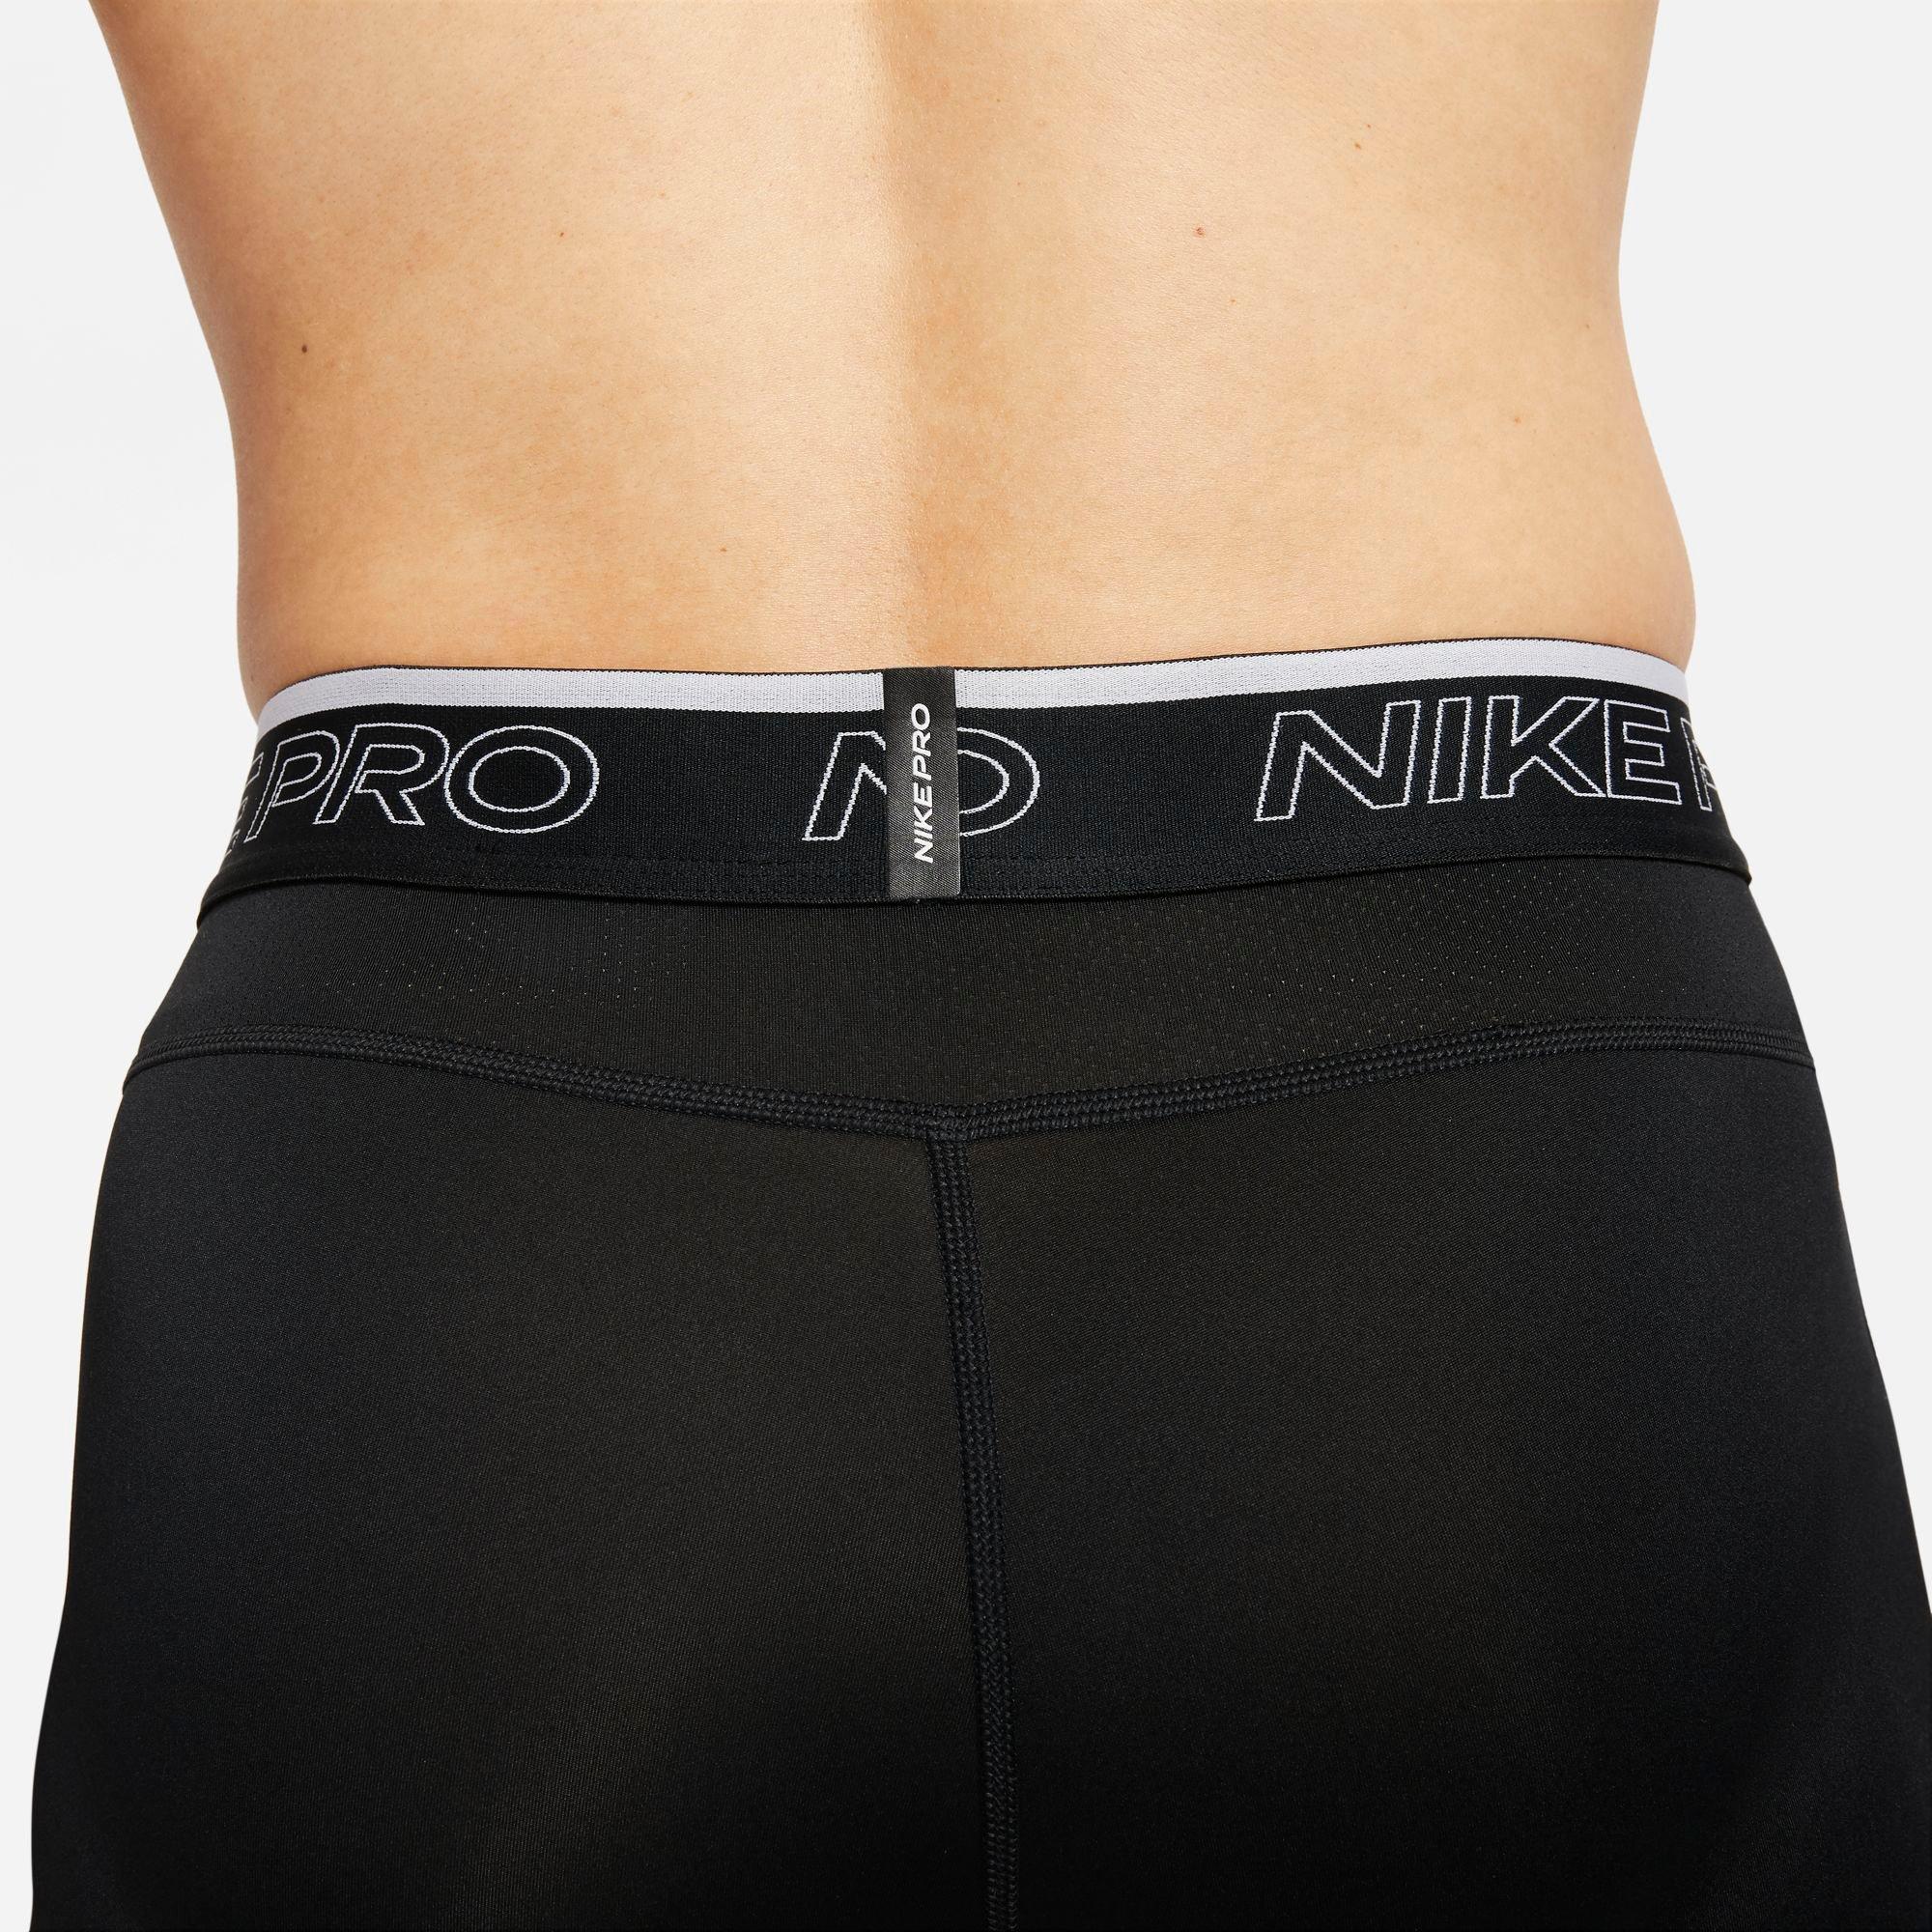 Nike Dri-Fit Pro Compression Shorts